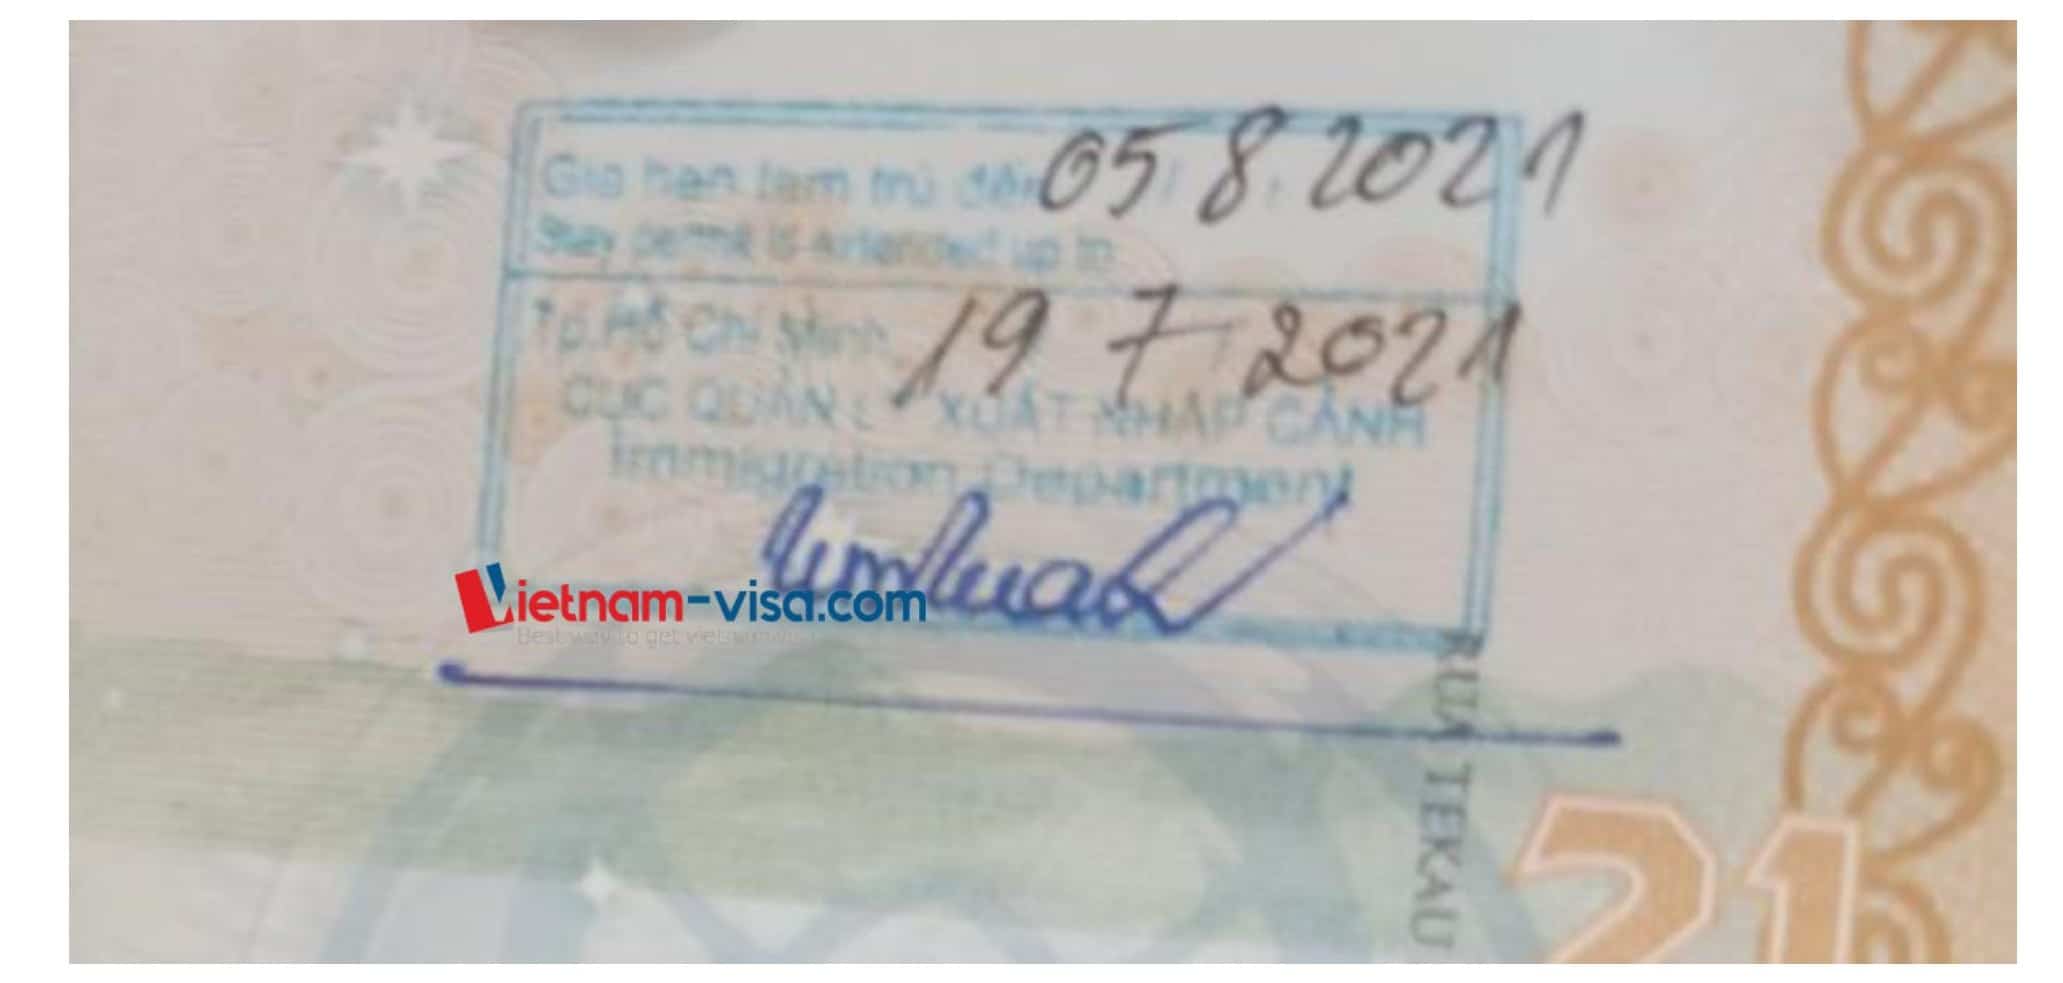 Vietnam exit visa for foreign baby born in Vietnam